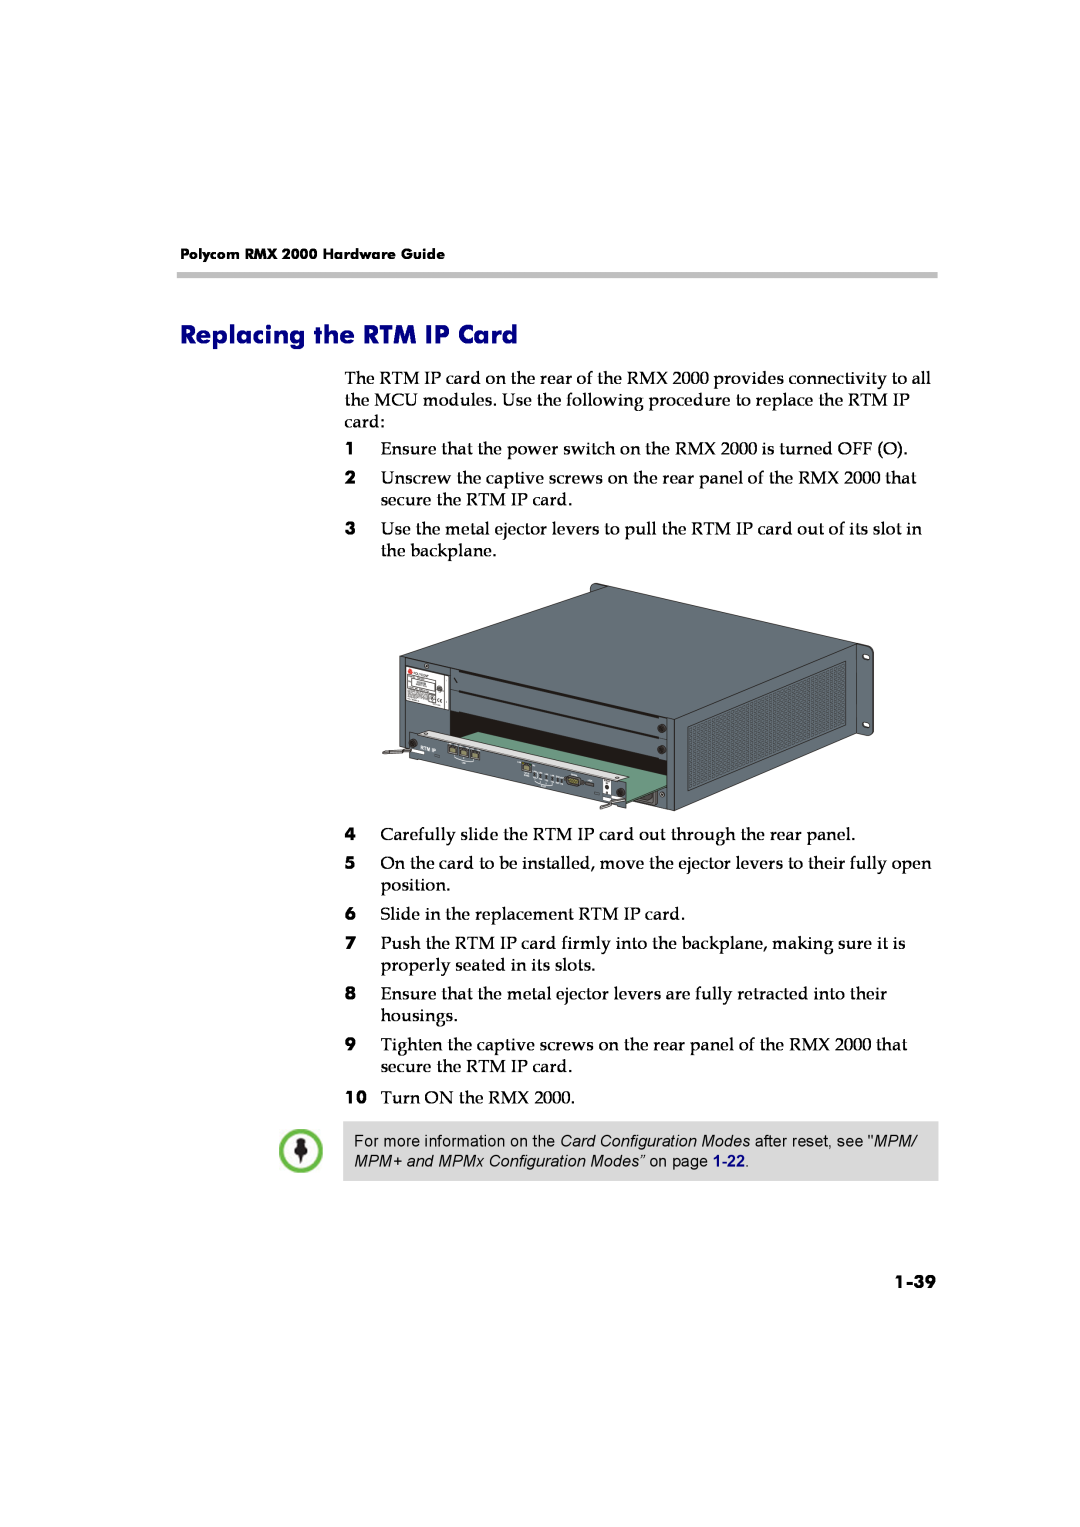 Polycom DOC2558B manual Replacing the RTM IP Card, 1-39 